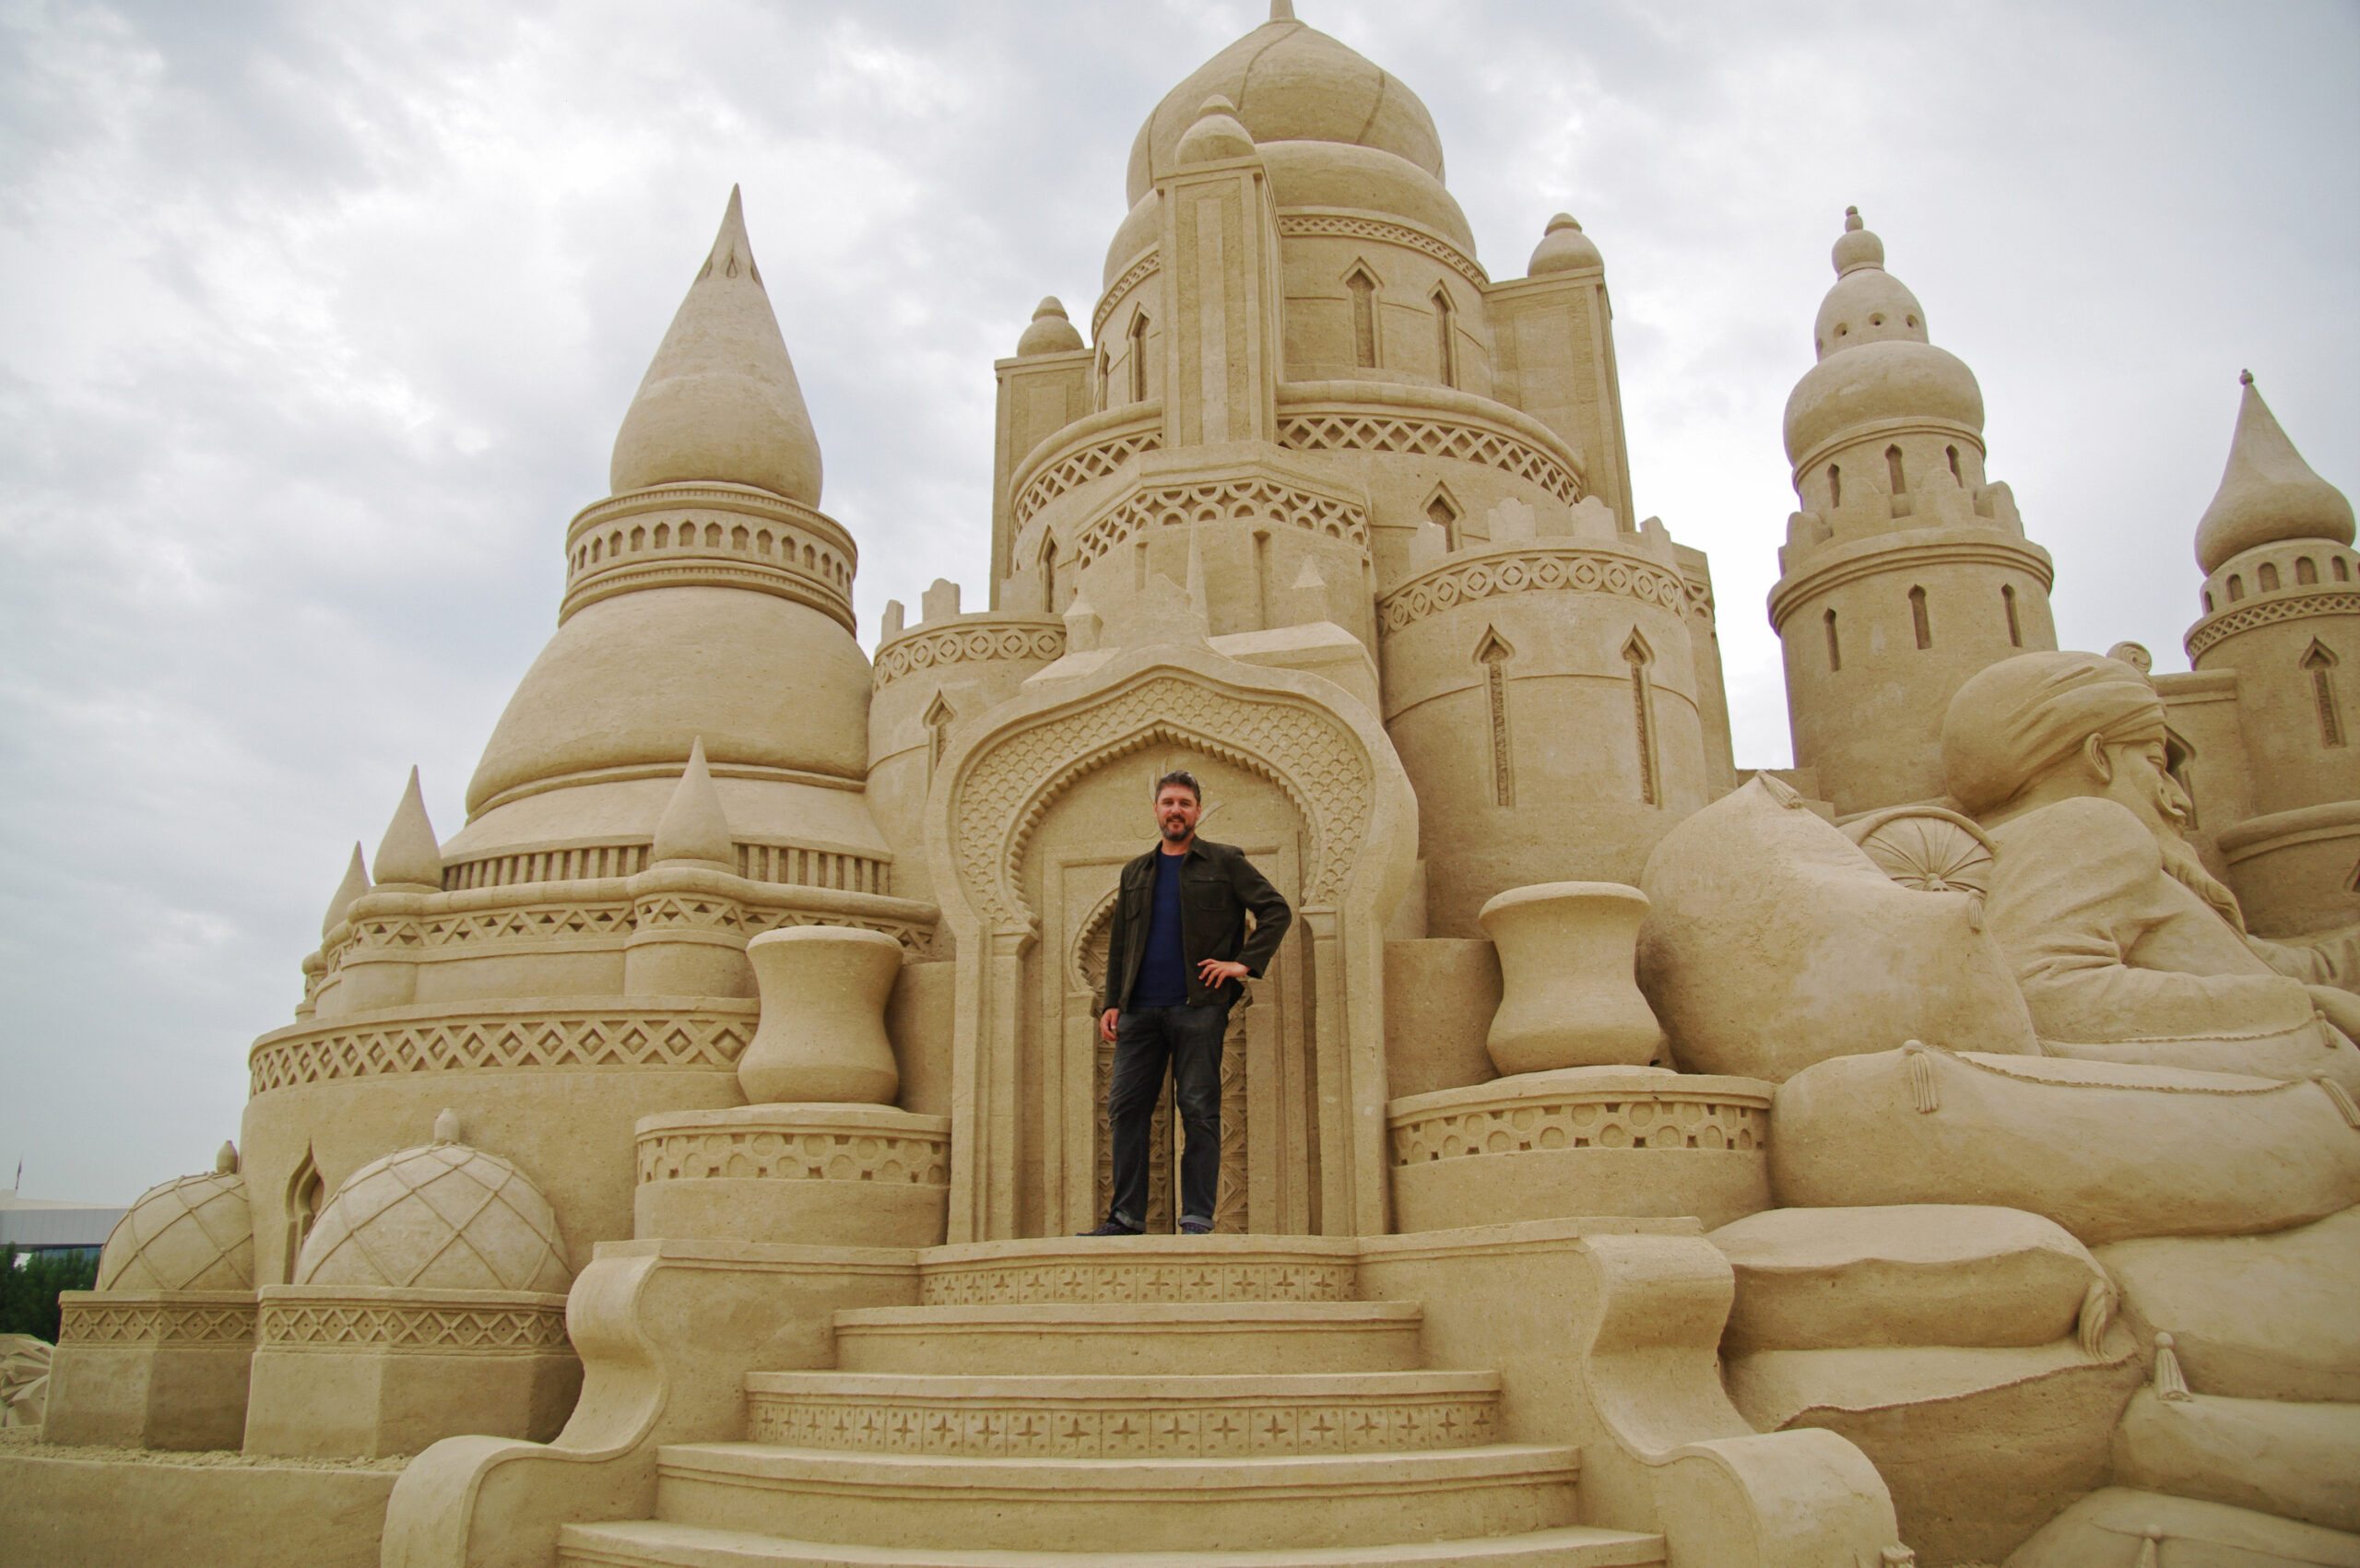 Victoria-based sand sculptor captures enchanting images in largest-ever sand sculpture park (PHOTOS)